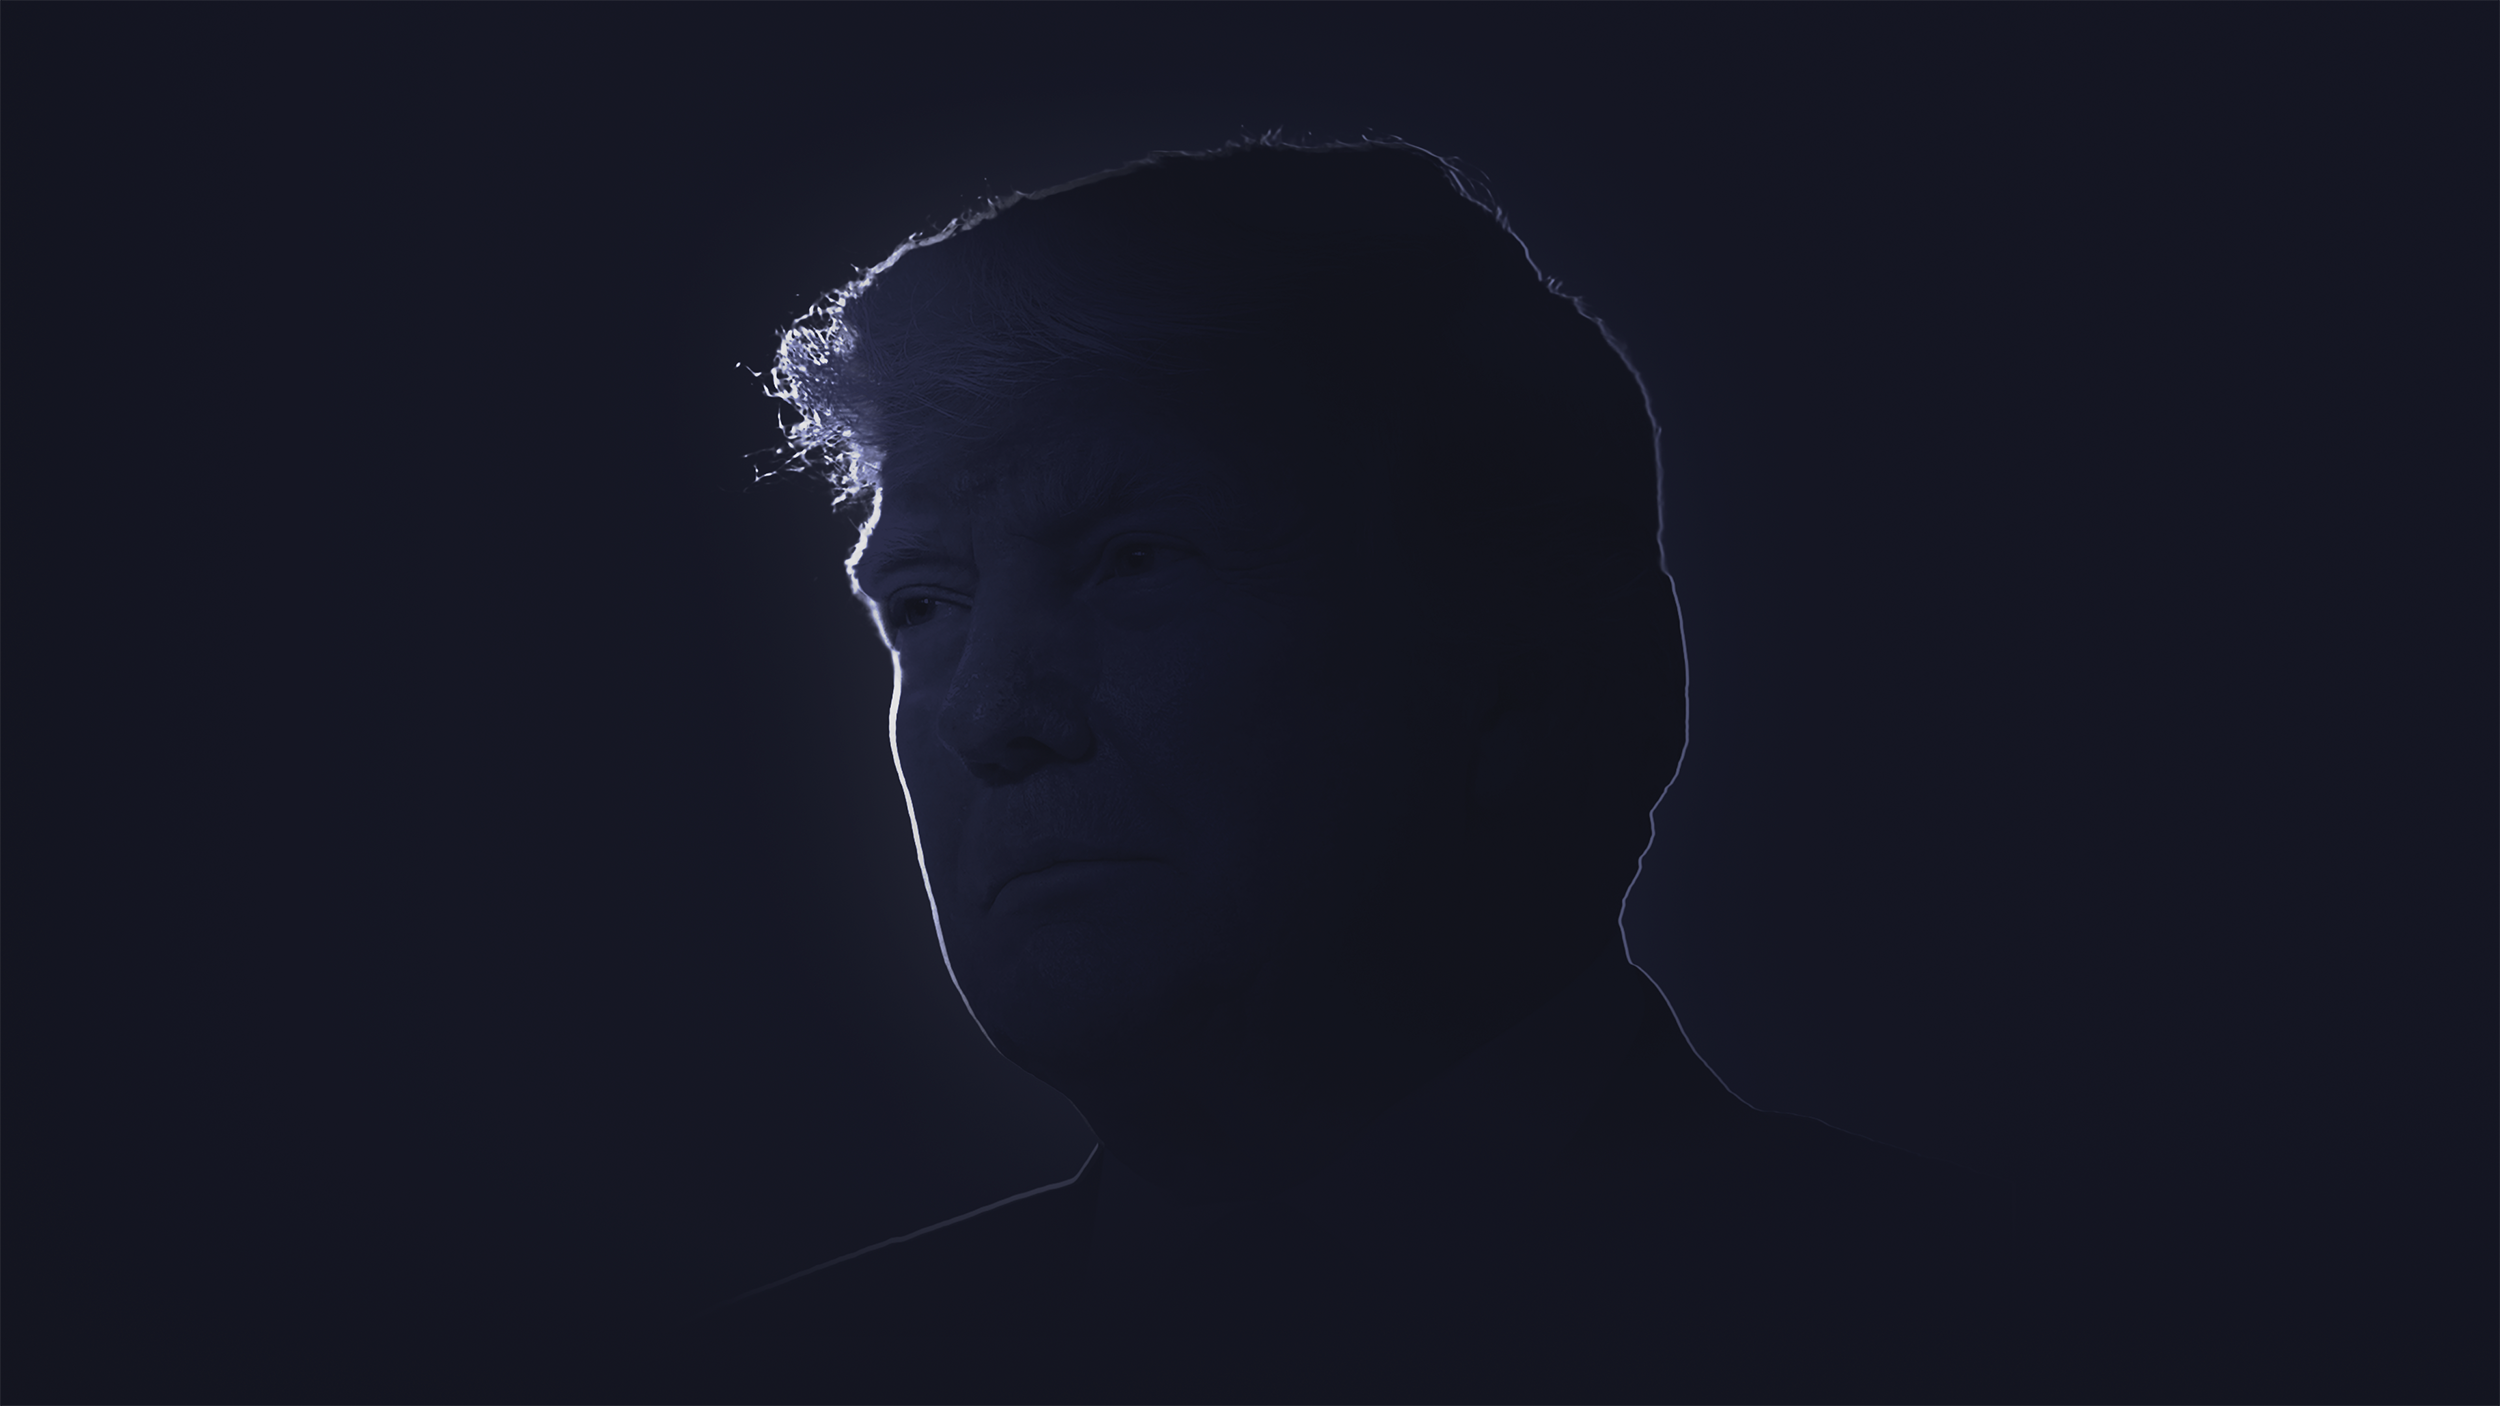 Donald Trump Silhouette headshot